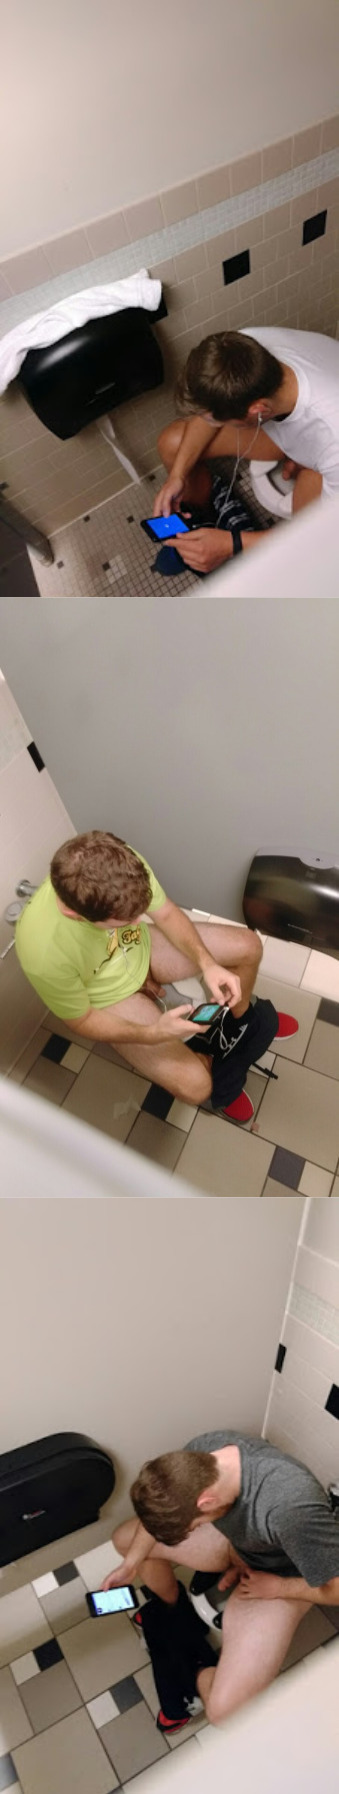 spy on guys restroom spycam